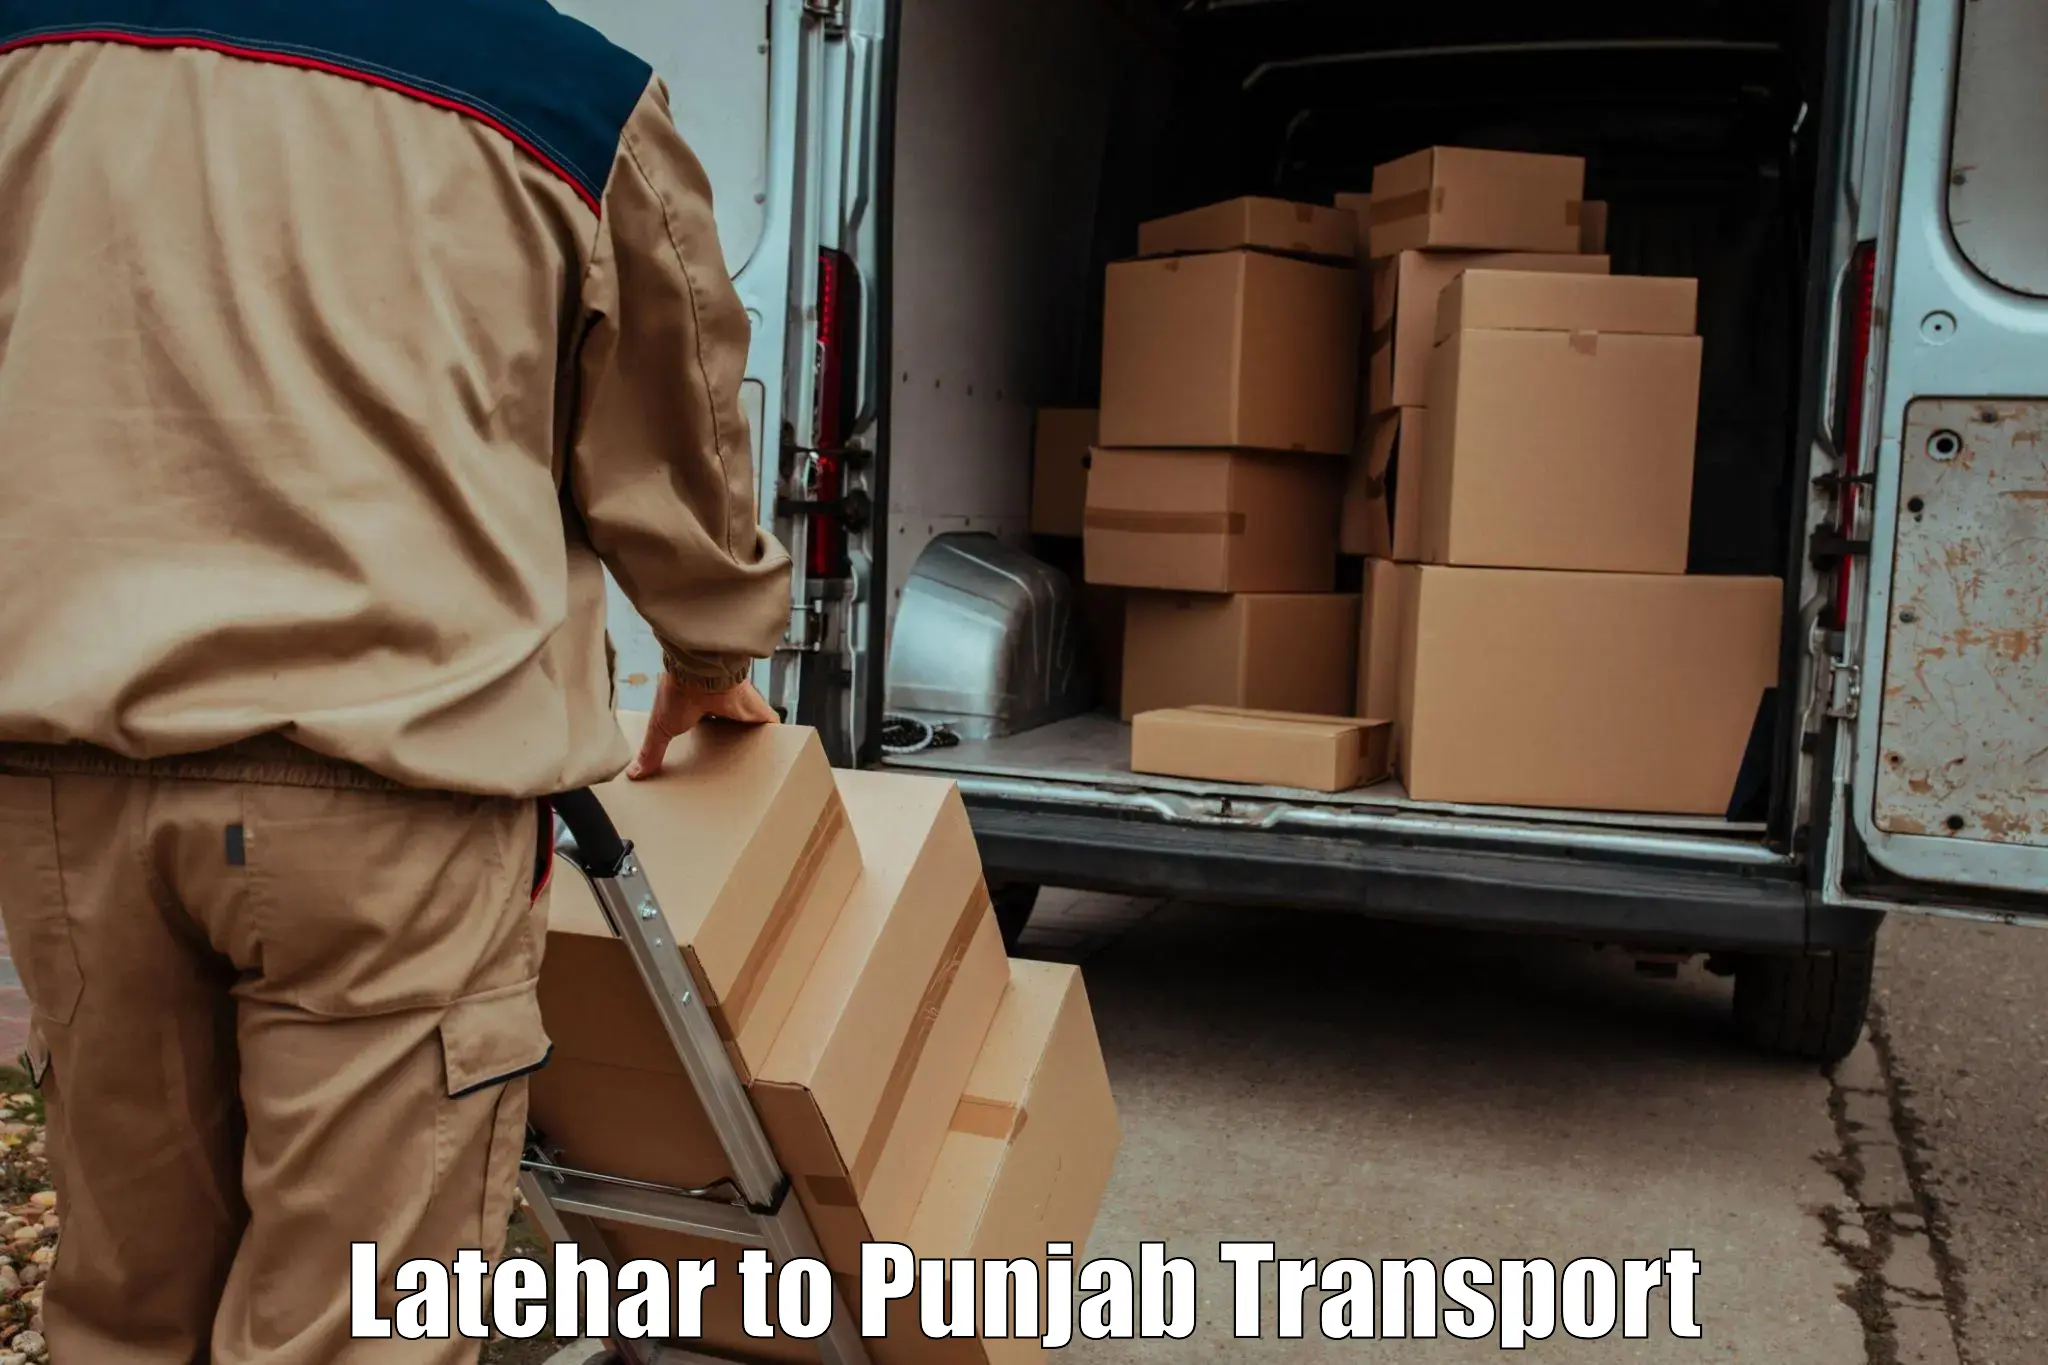 Daily transport service Latehar to Sangrur